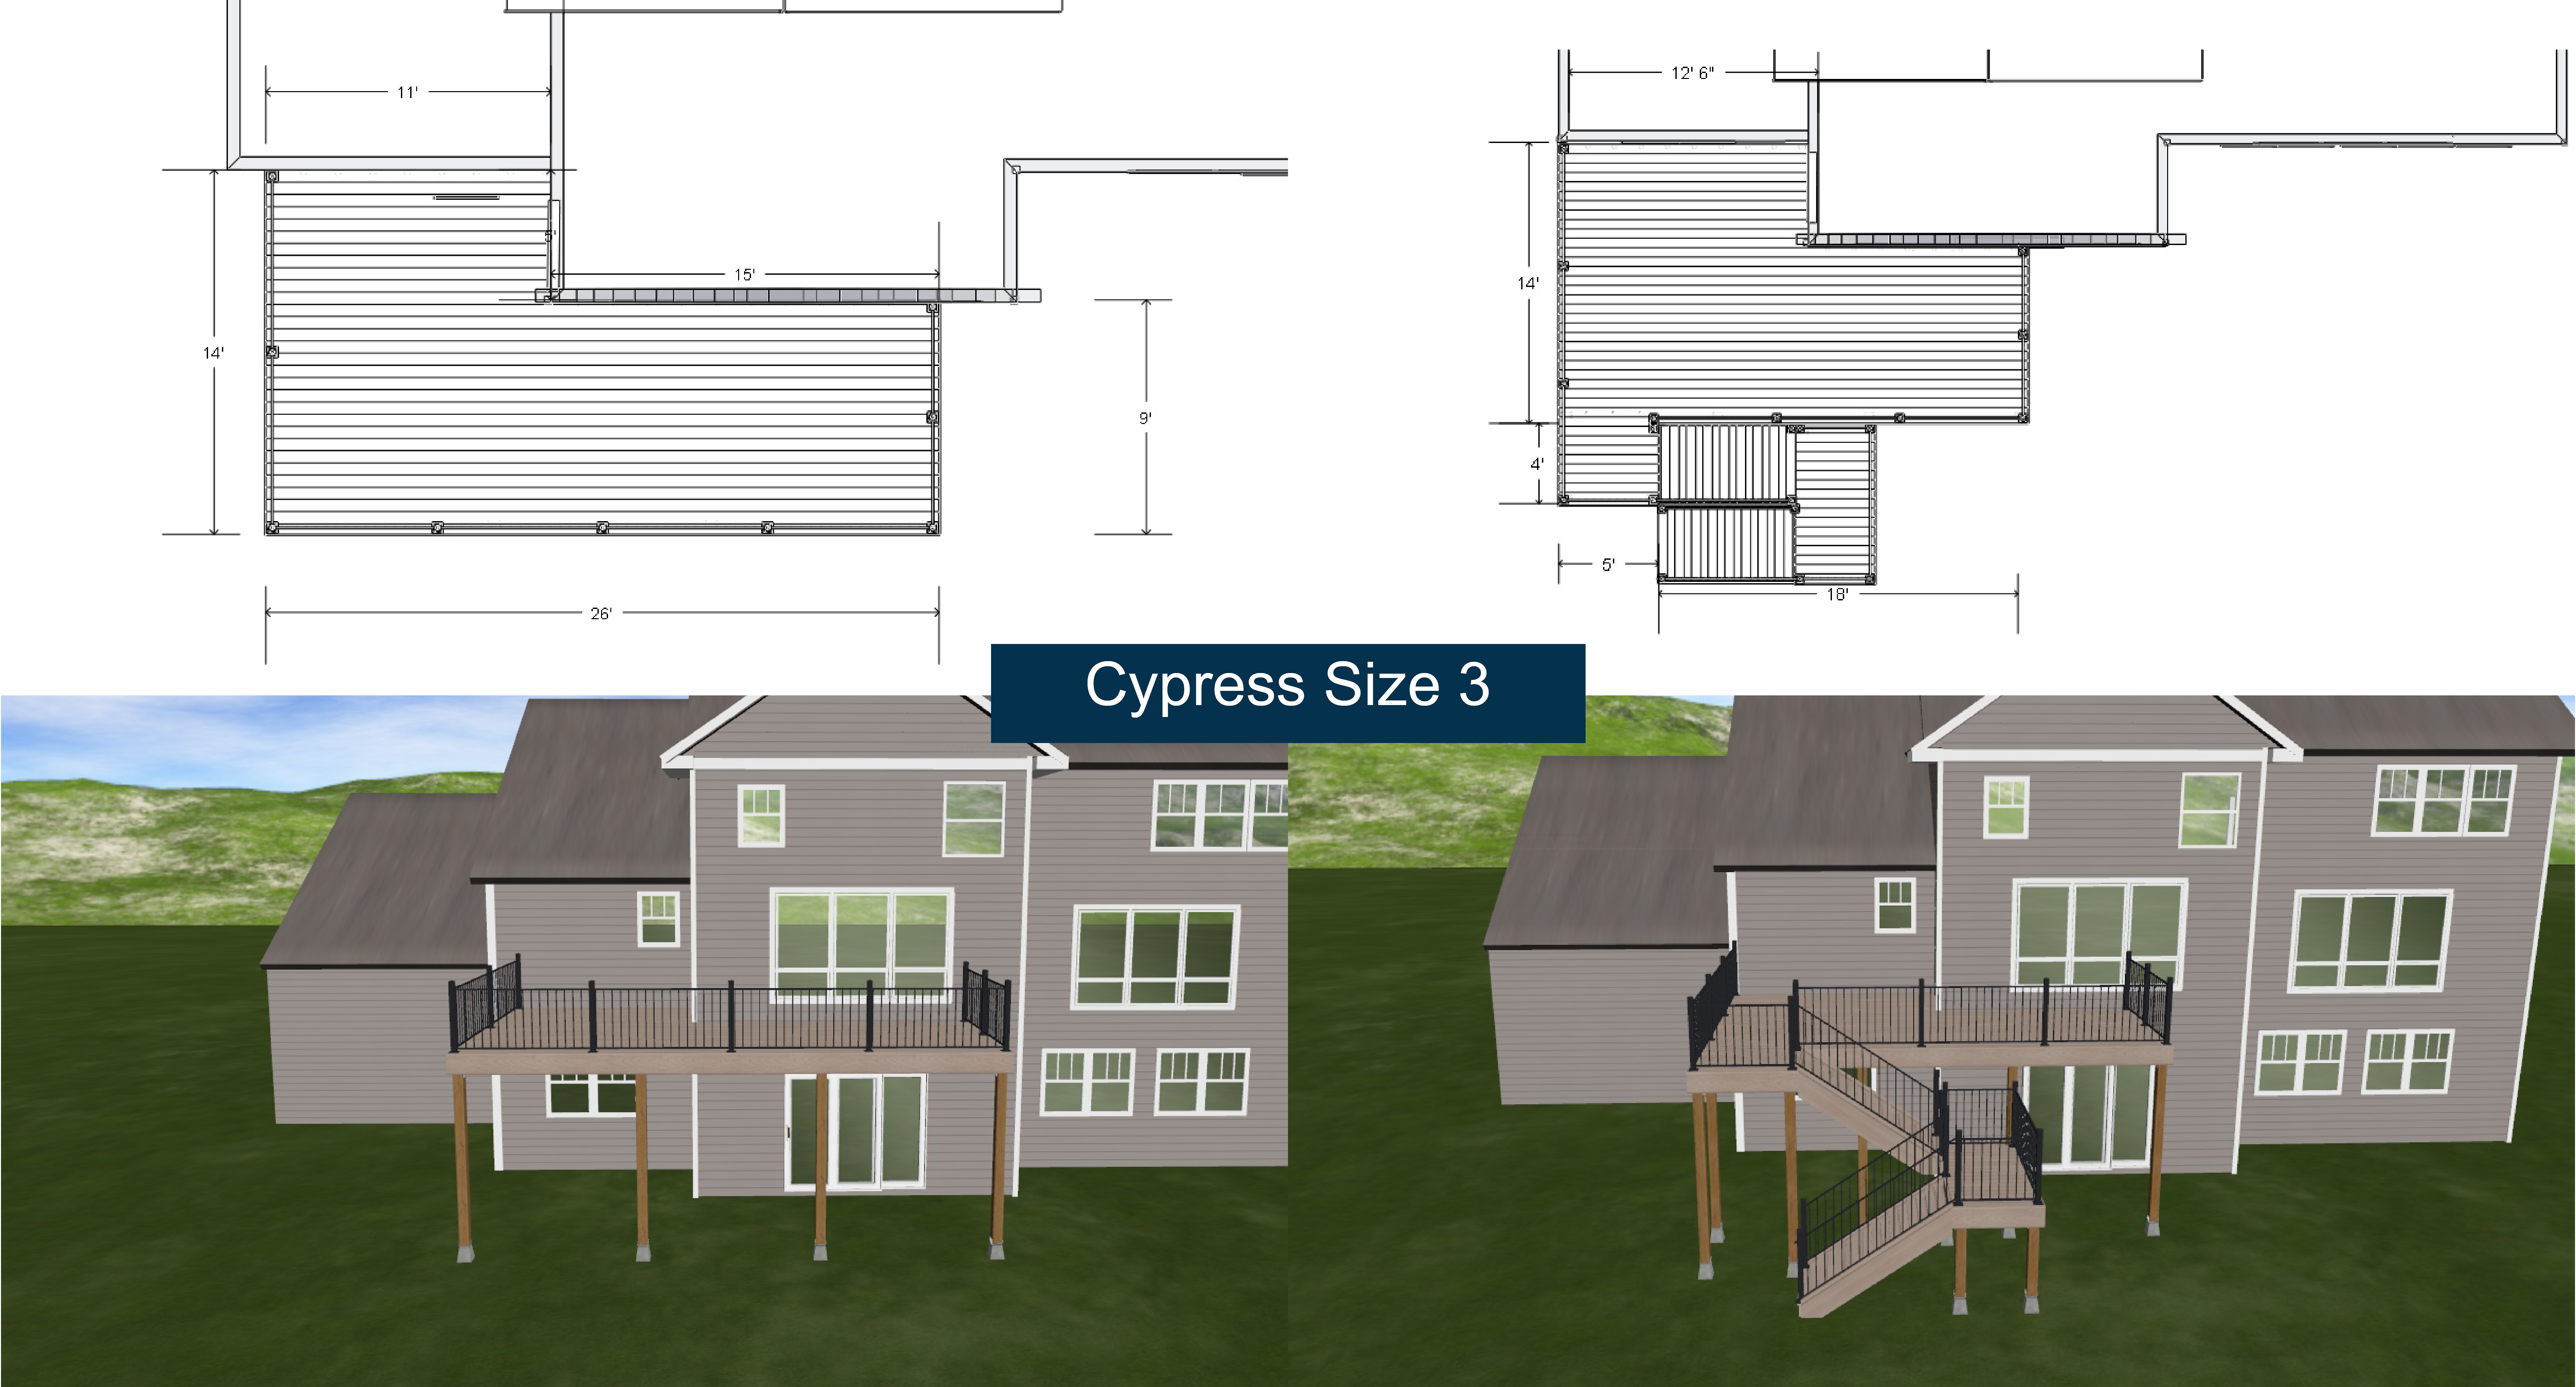 CWeb Cypress Size 3